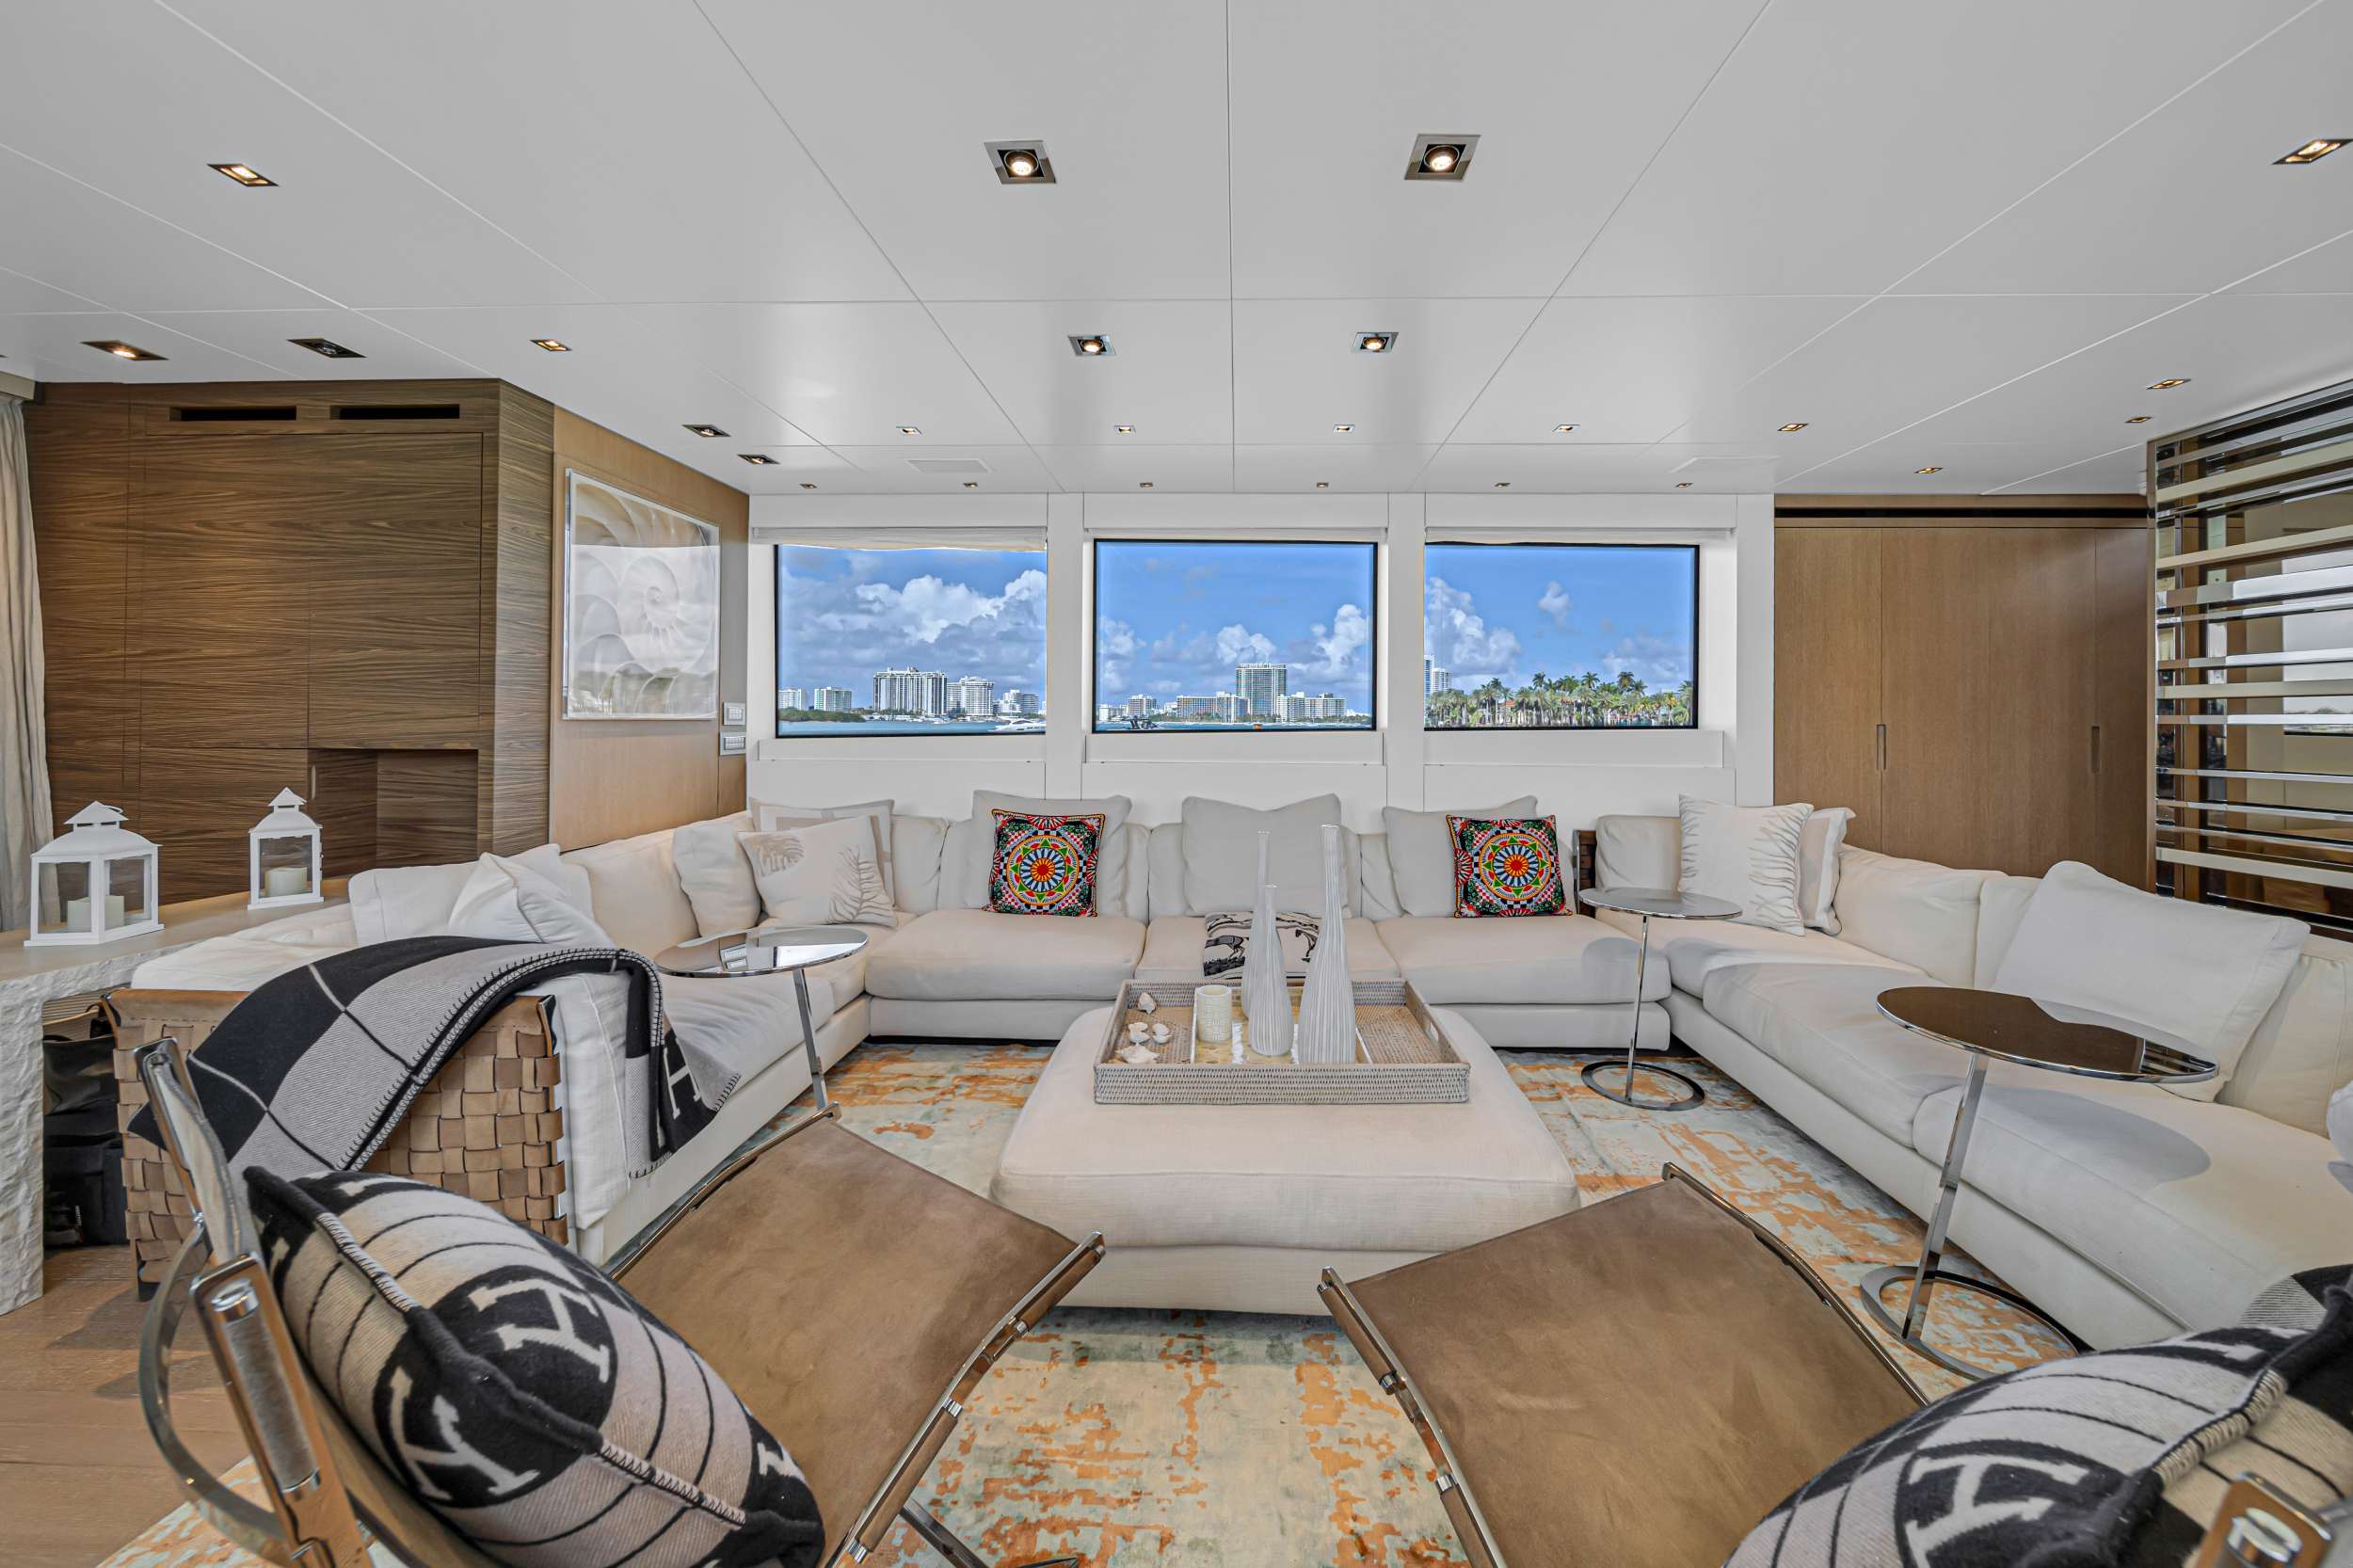 Astonish - Yacht Charter USA & Boat hire in Florida & Bahamas 2